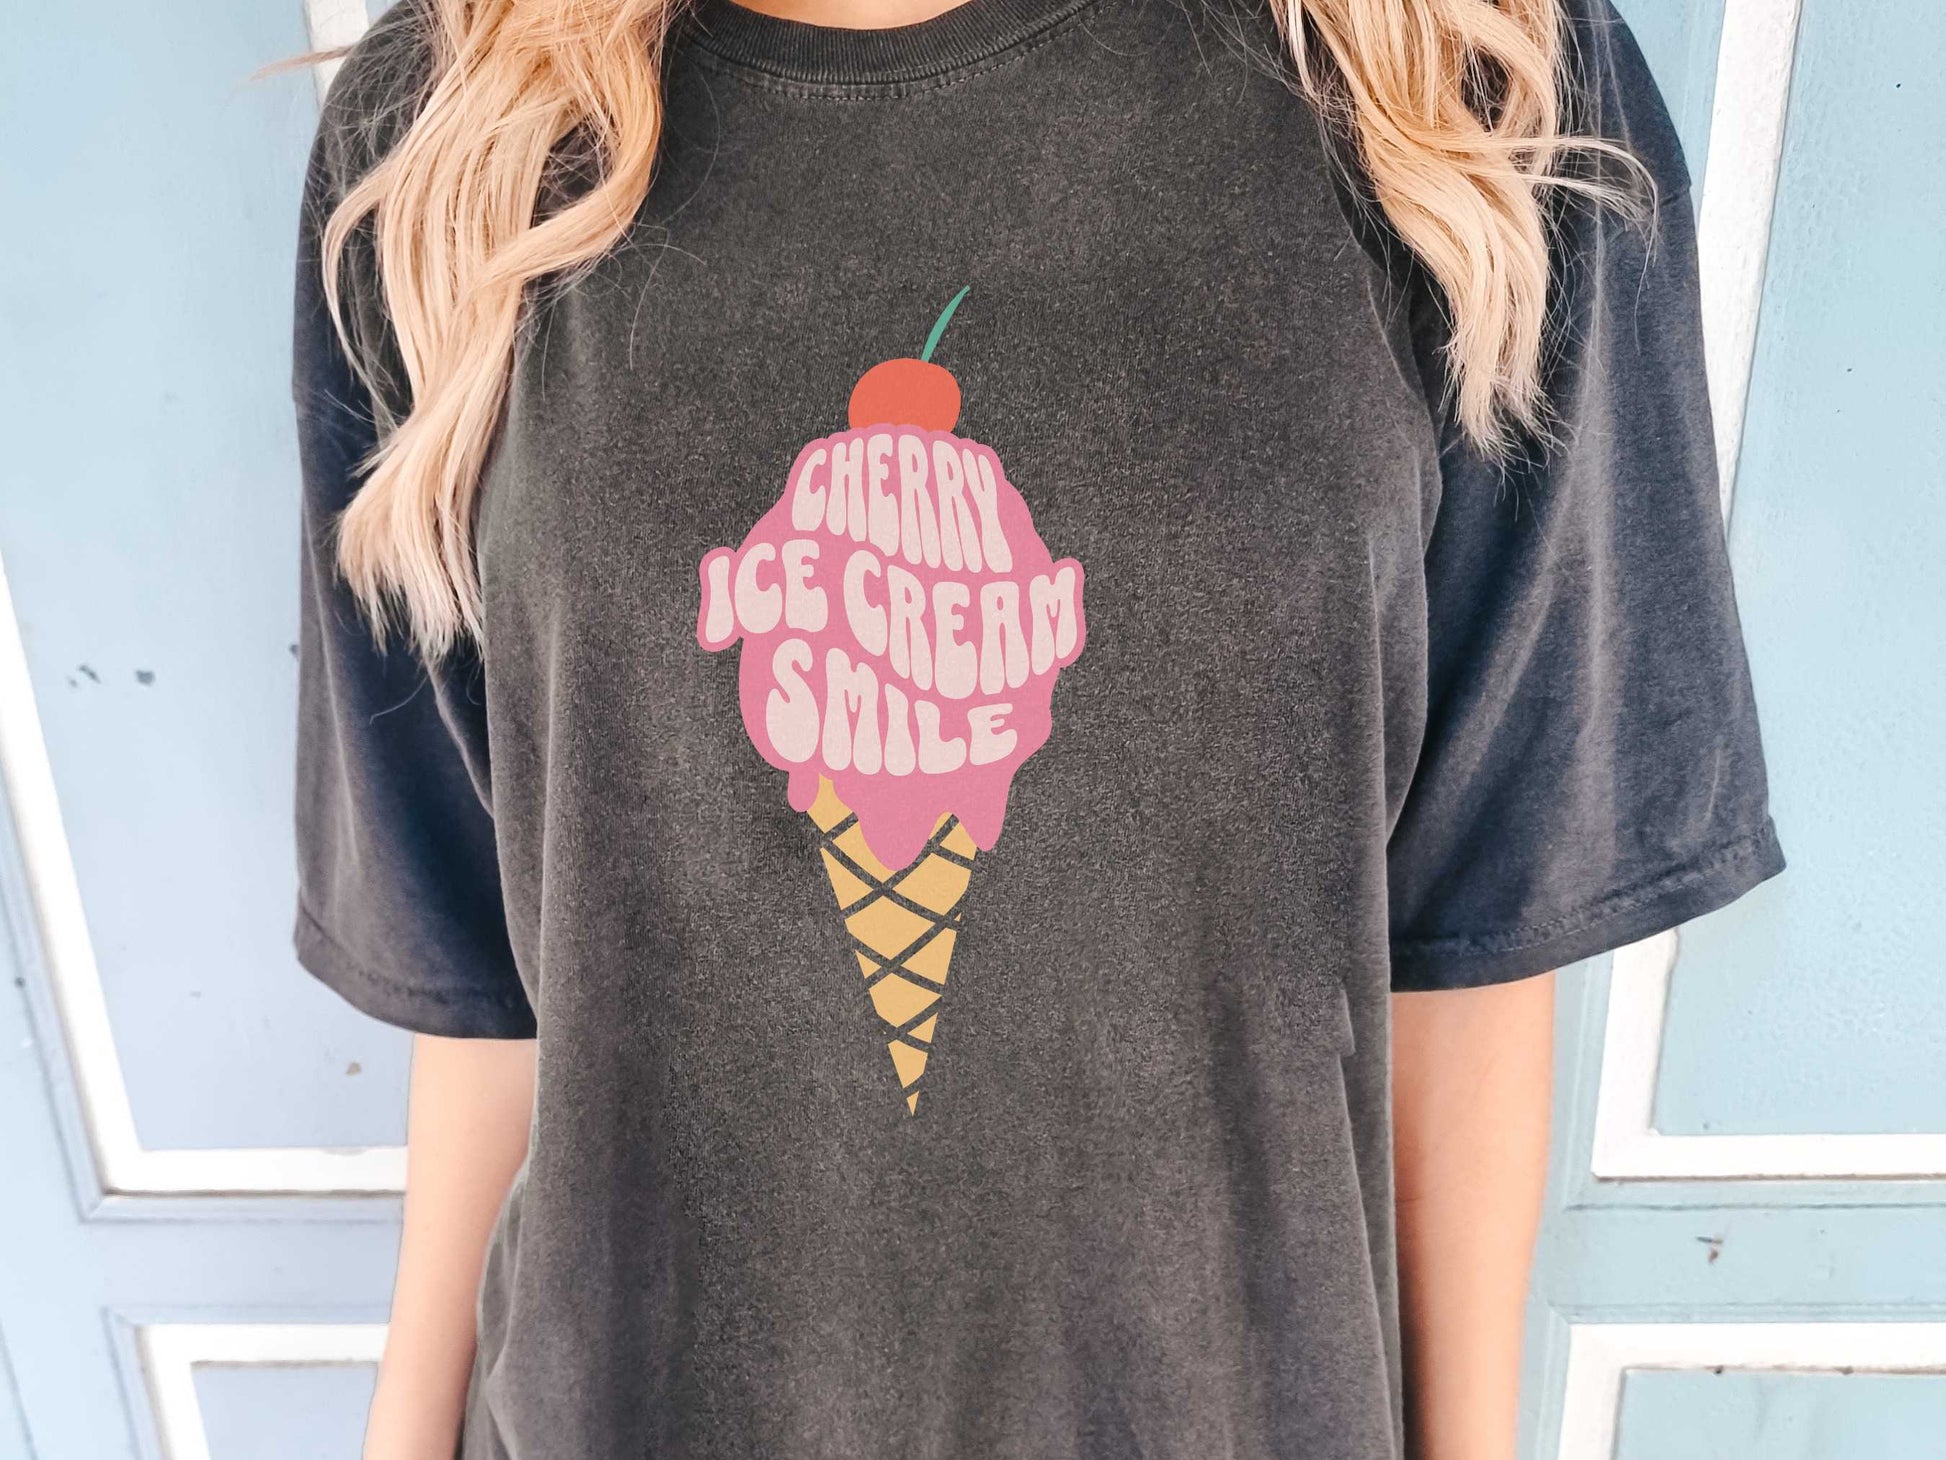 Duran Duran Rio "Cherry Ice Cream Smile" T-Shirt in Pepper